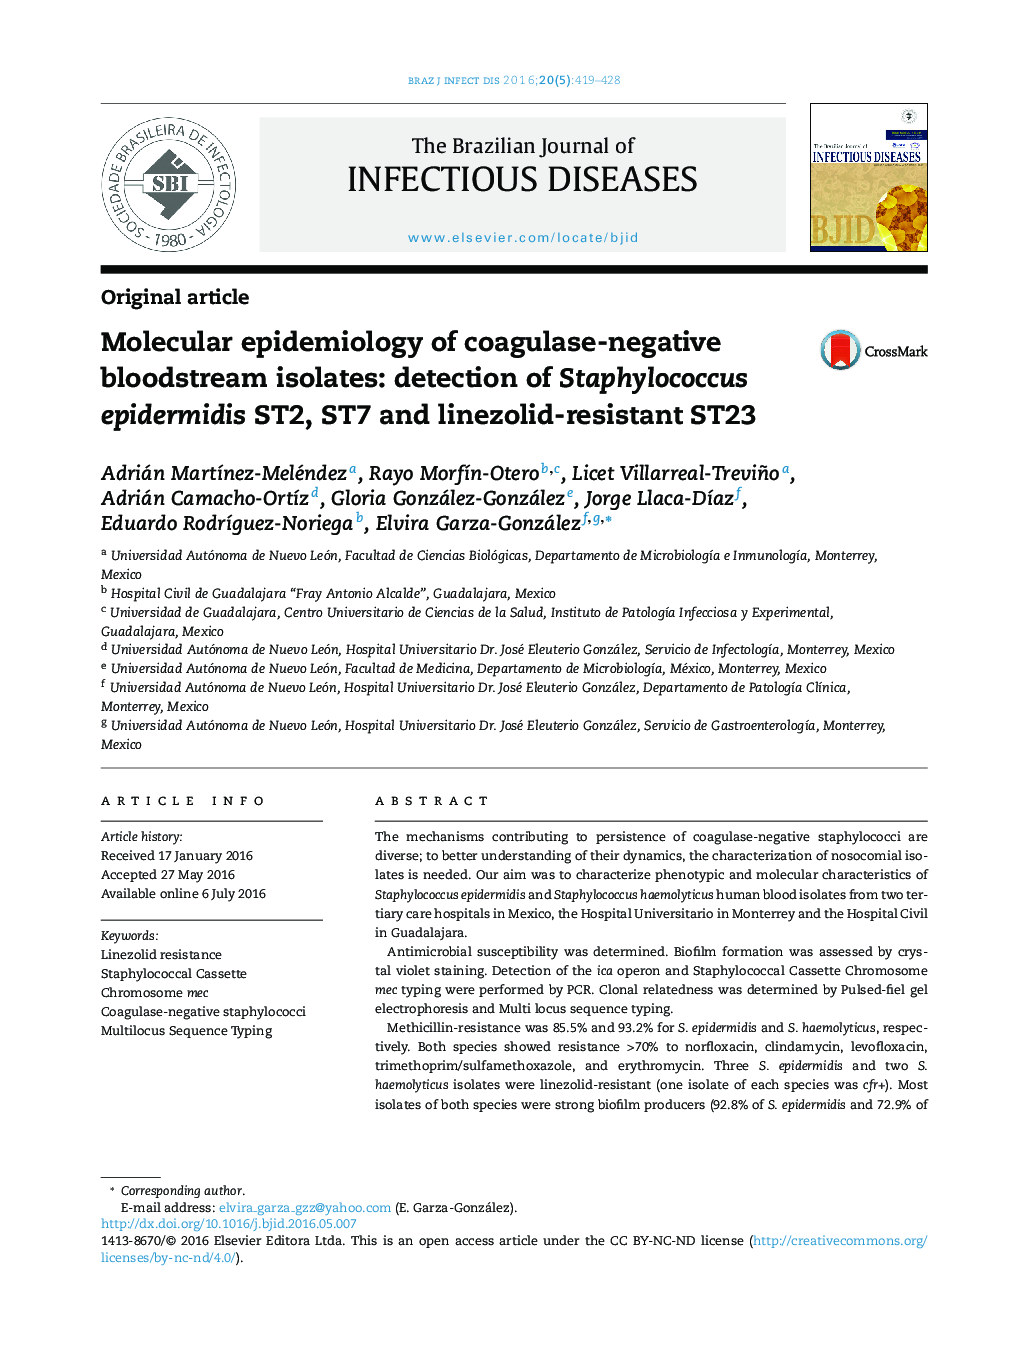 Molecular epidemiology of coagulase-negative bloodstream isolates: detection of Staphylococcus epidermidis ST2, ST7 and linezolid-resistant ST23